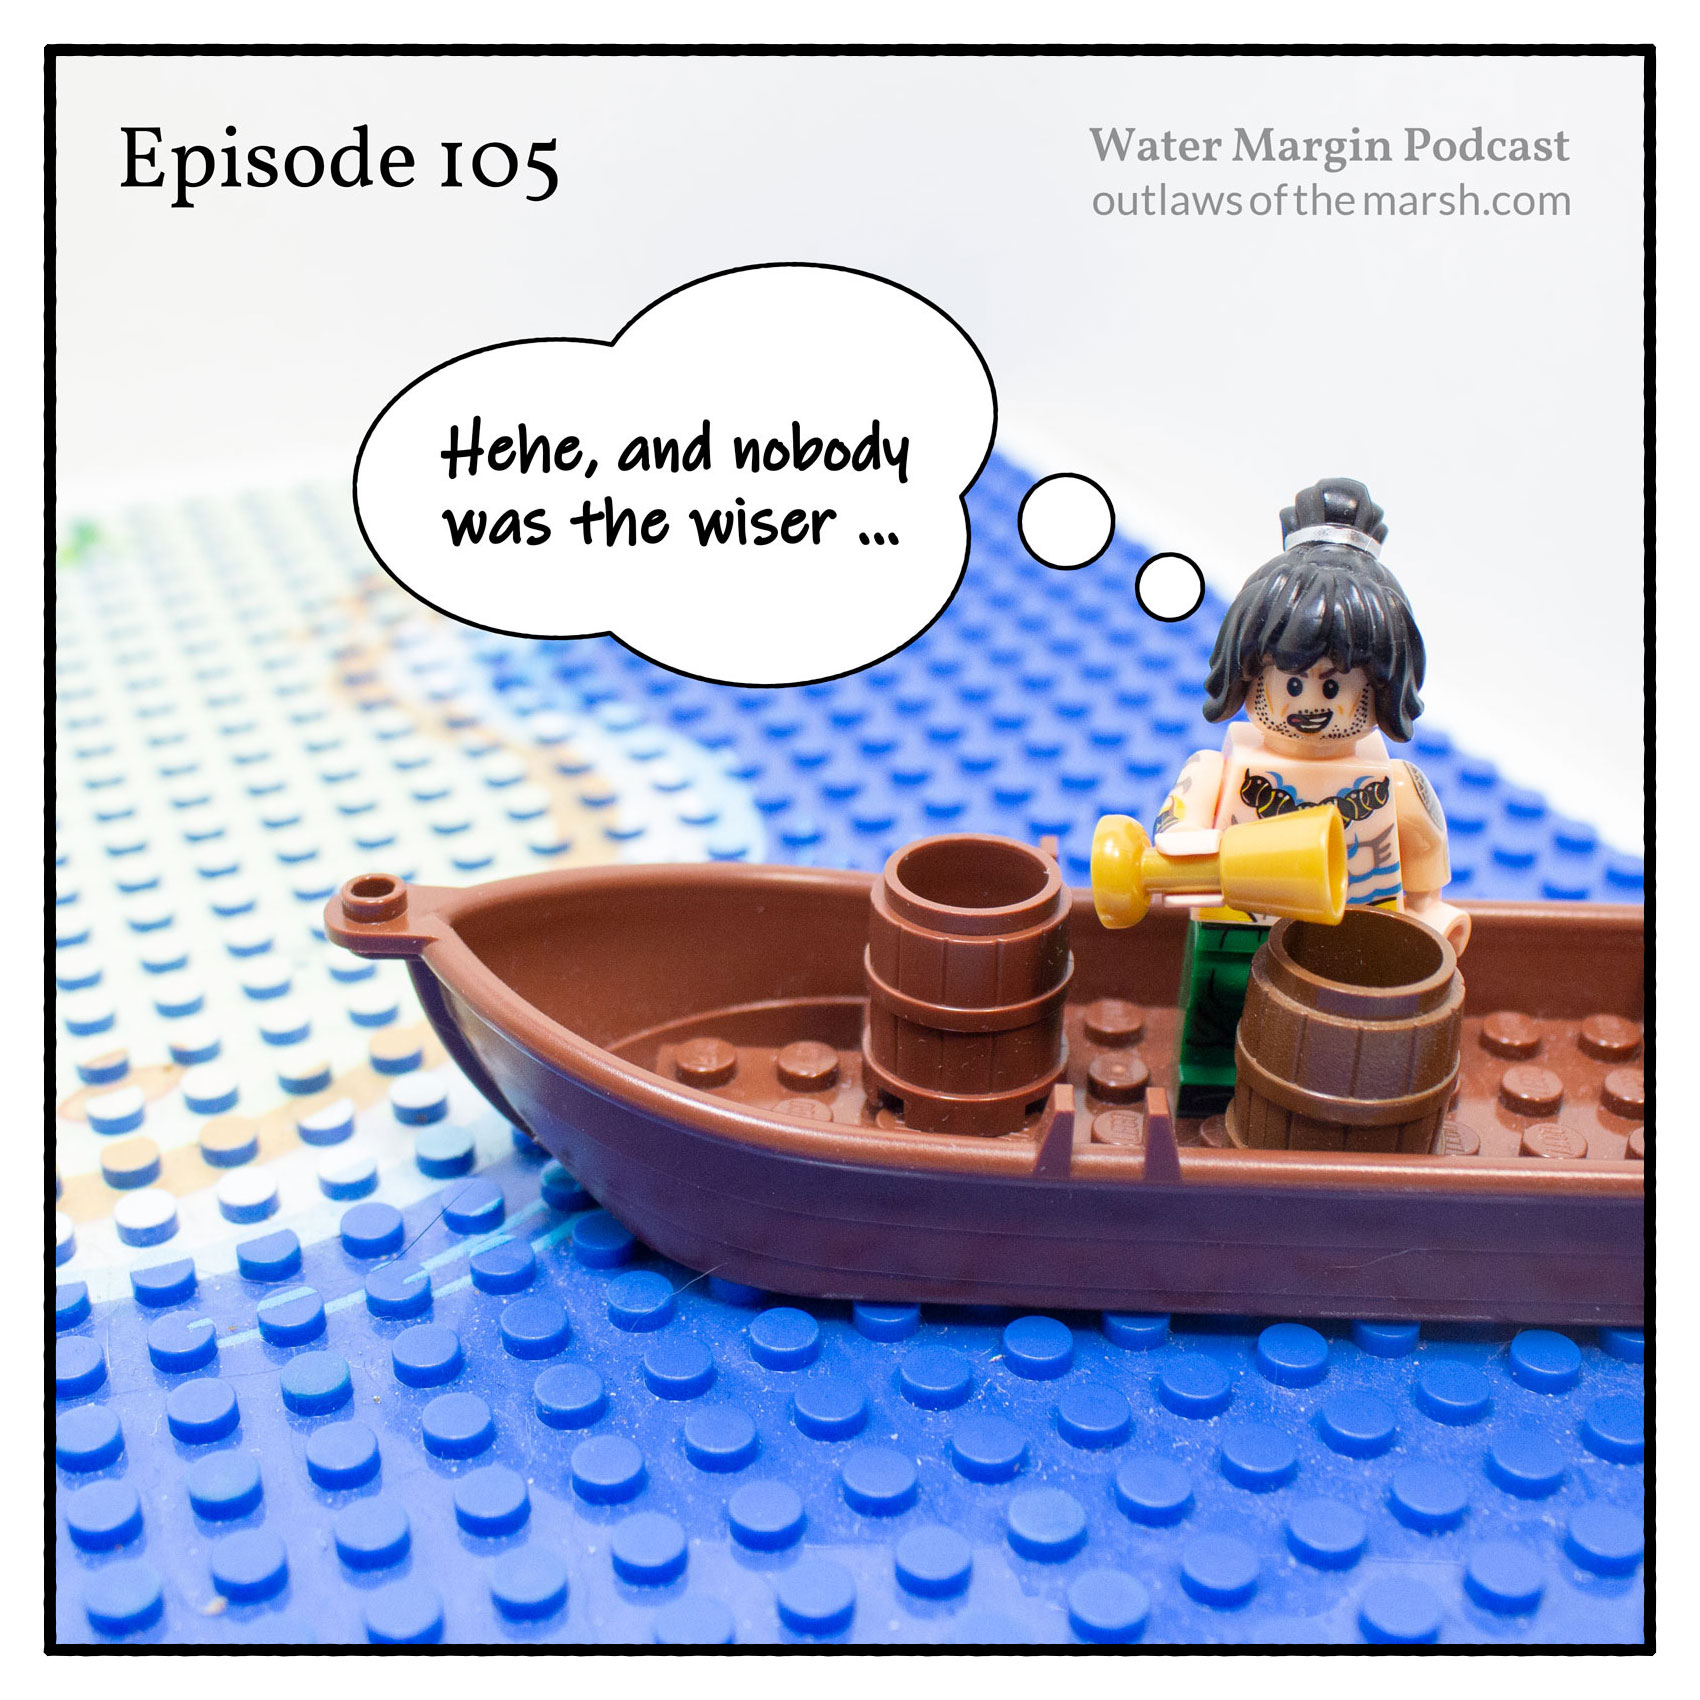 Water Margin Podcast: Episode 105